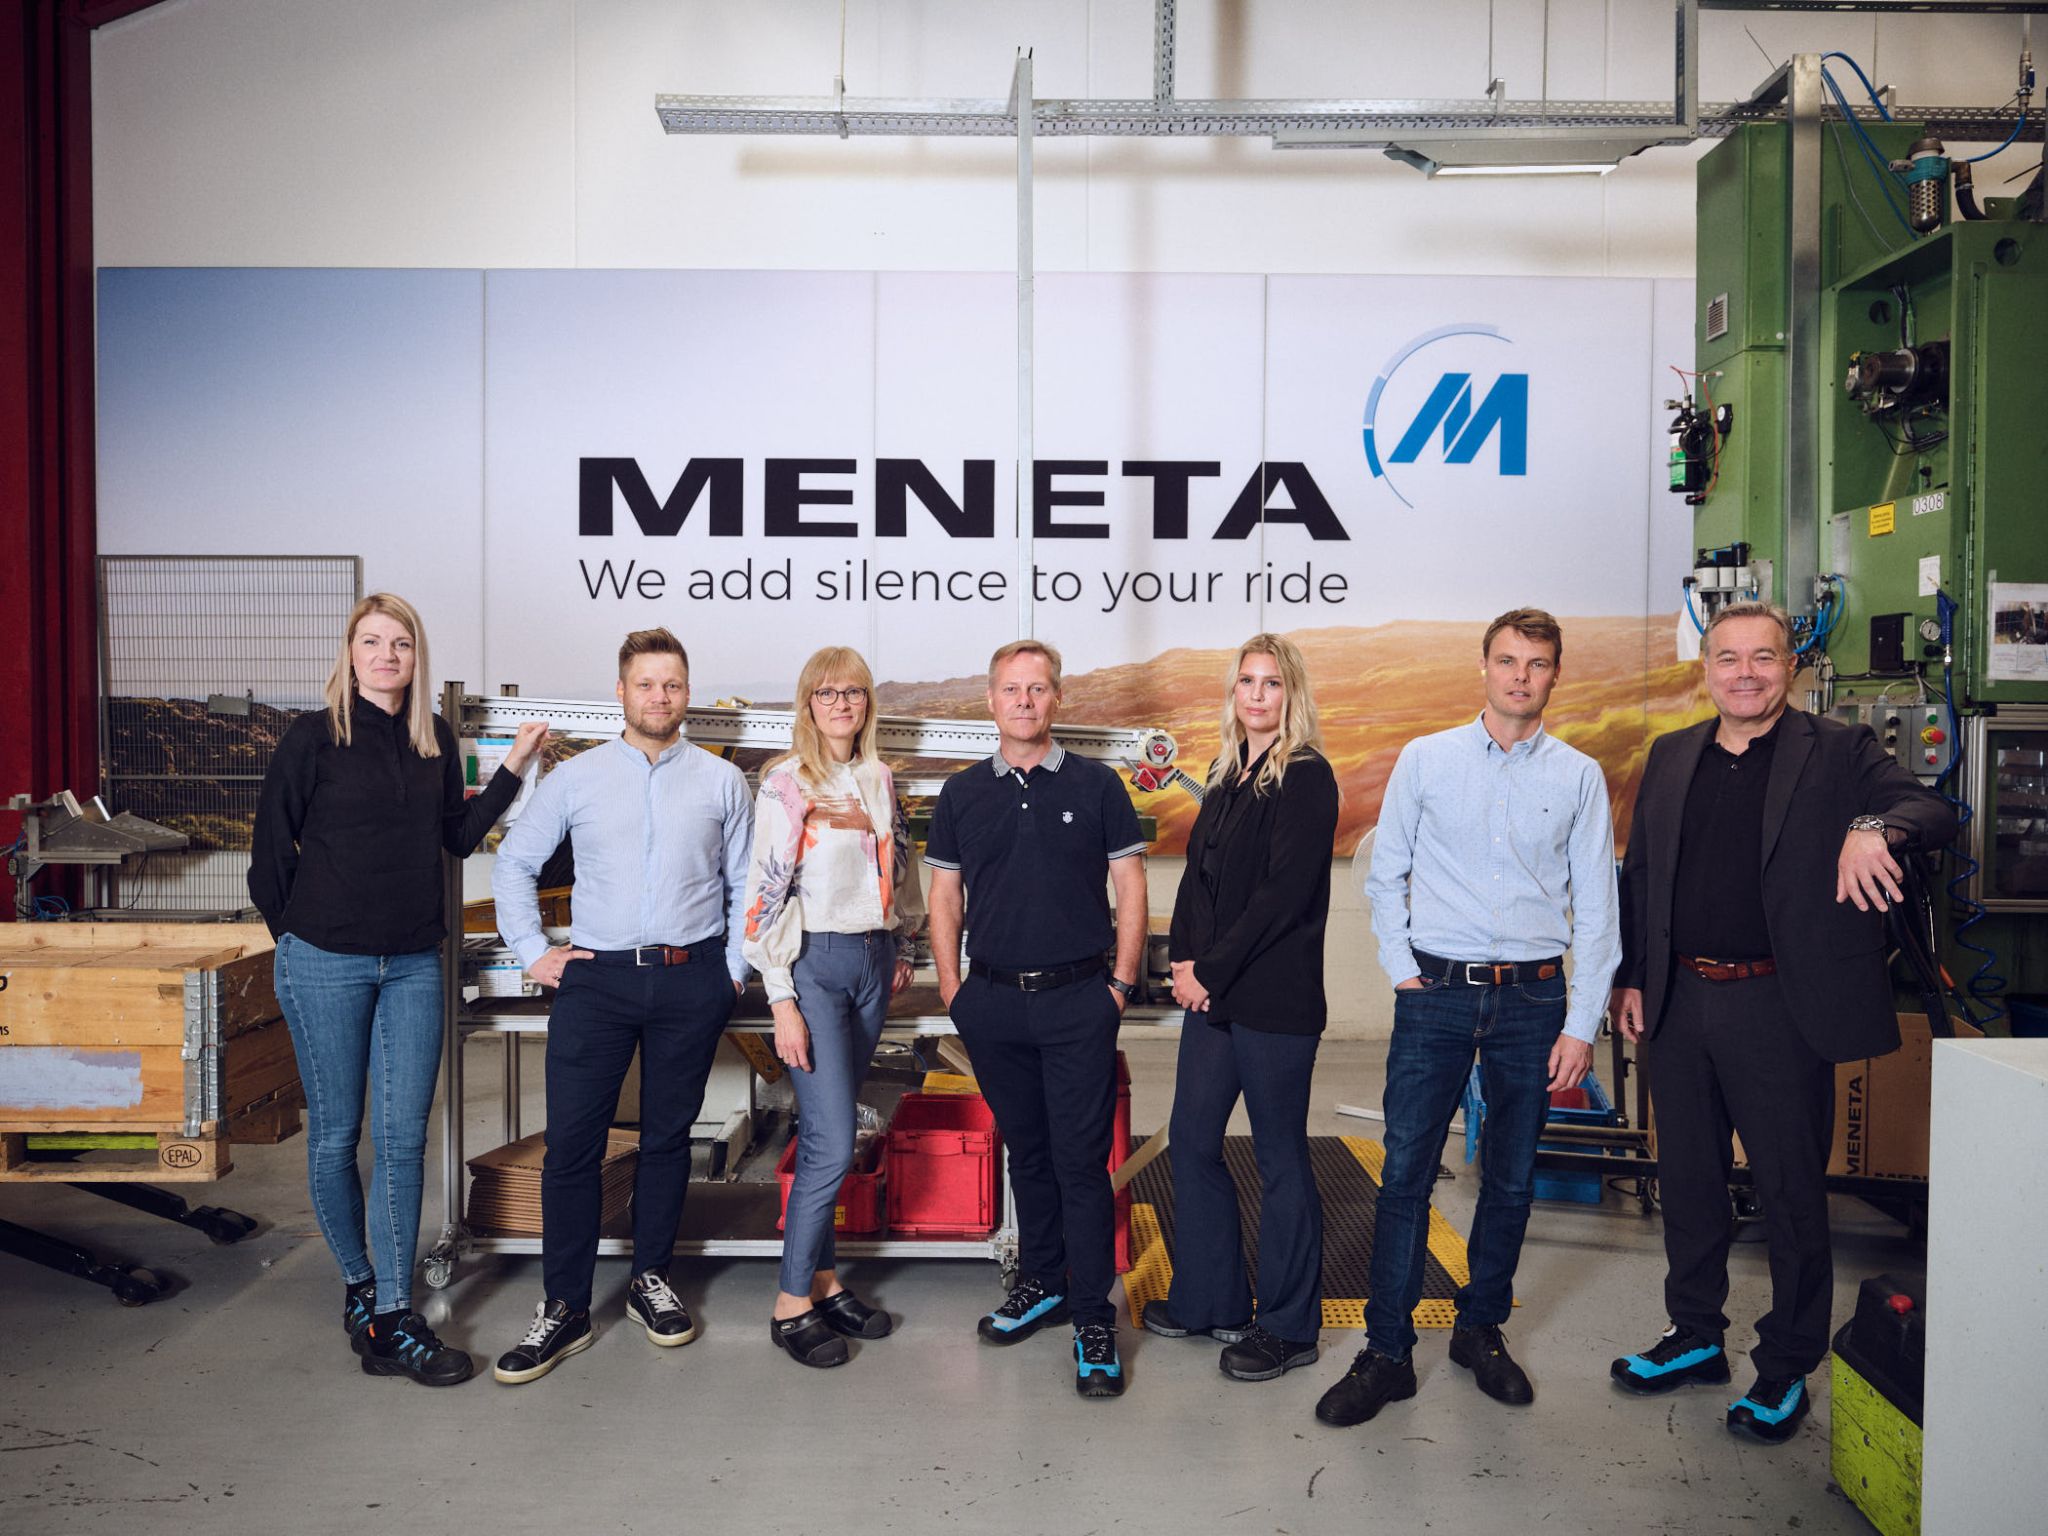 Meneta was chosen as one of the best managed companies by Deloitte